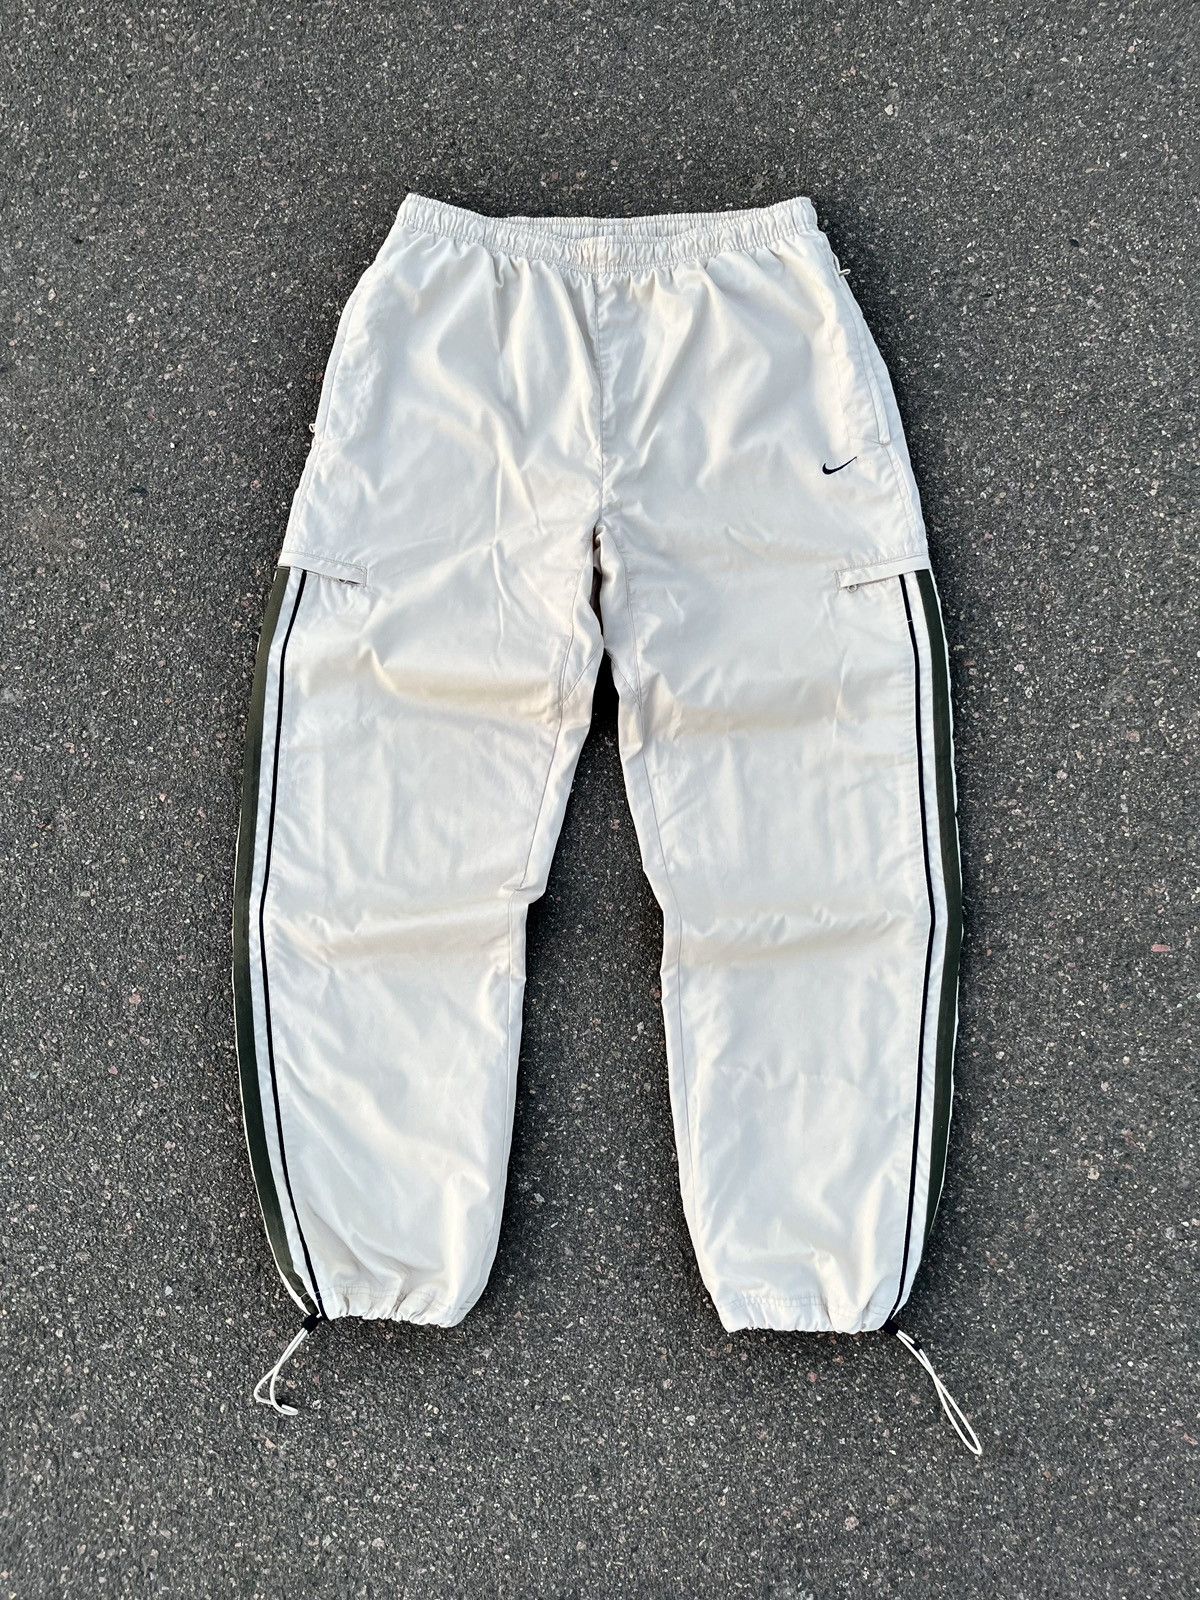 Nike Nike Vintage Parachutes Track Pants Drill Y2K Nylon Gorpcore | Grailed